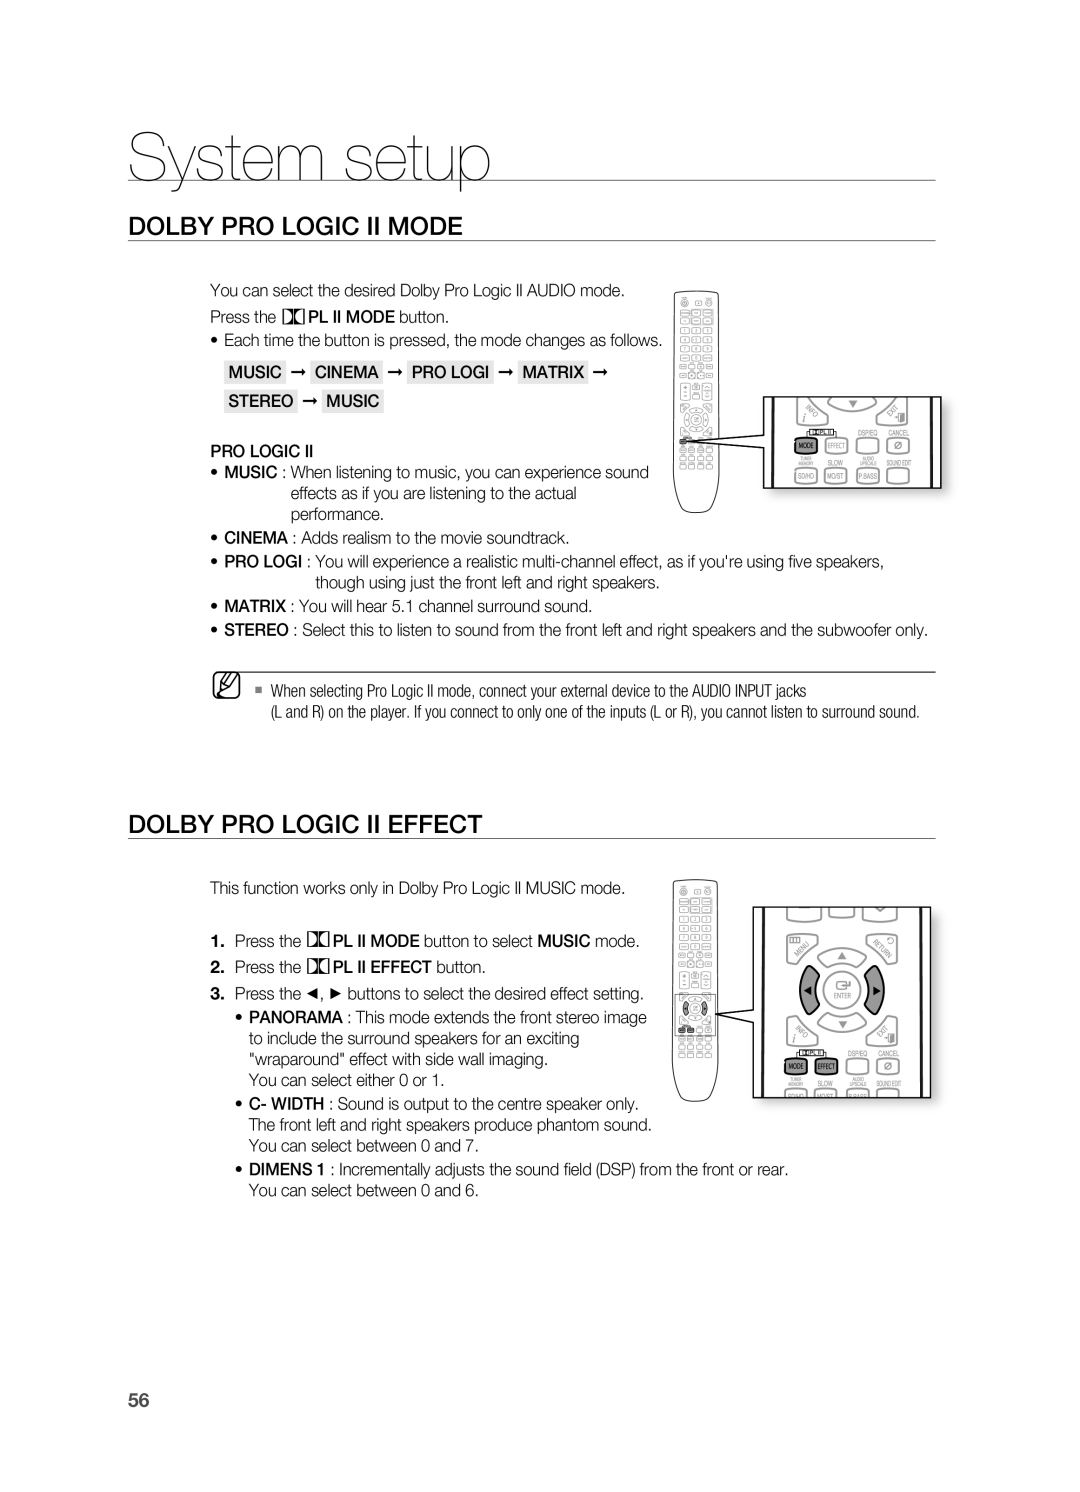 Samsung HT-X725G, HT-TX725G user manual DOLBY PrO LOGIC II MODE, DOLBY PrO LOGIC II EFFECT, System setup 